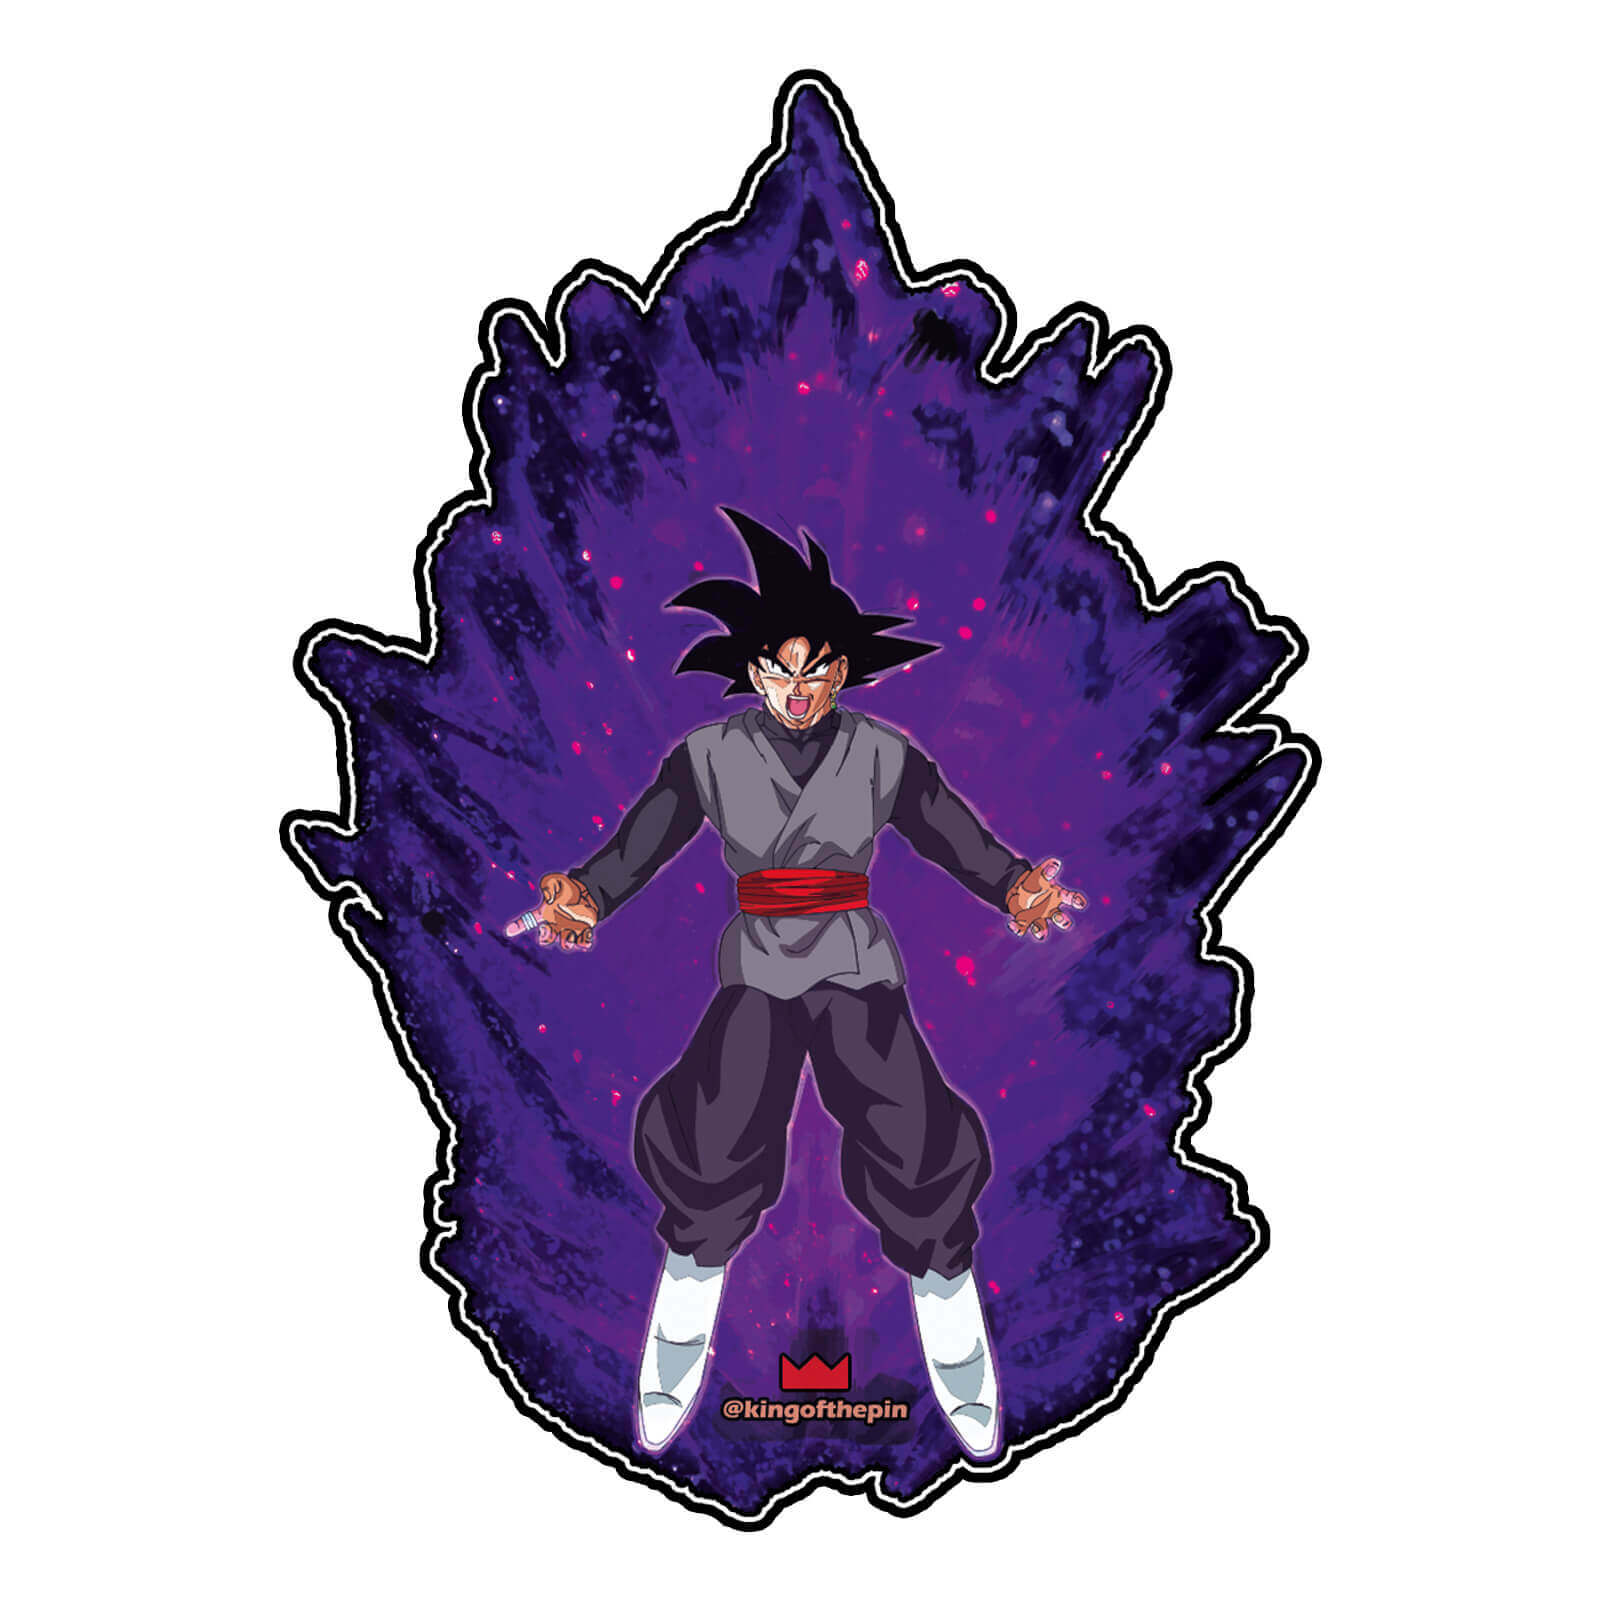 Yar OLR - Zamasu (Goku black)